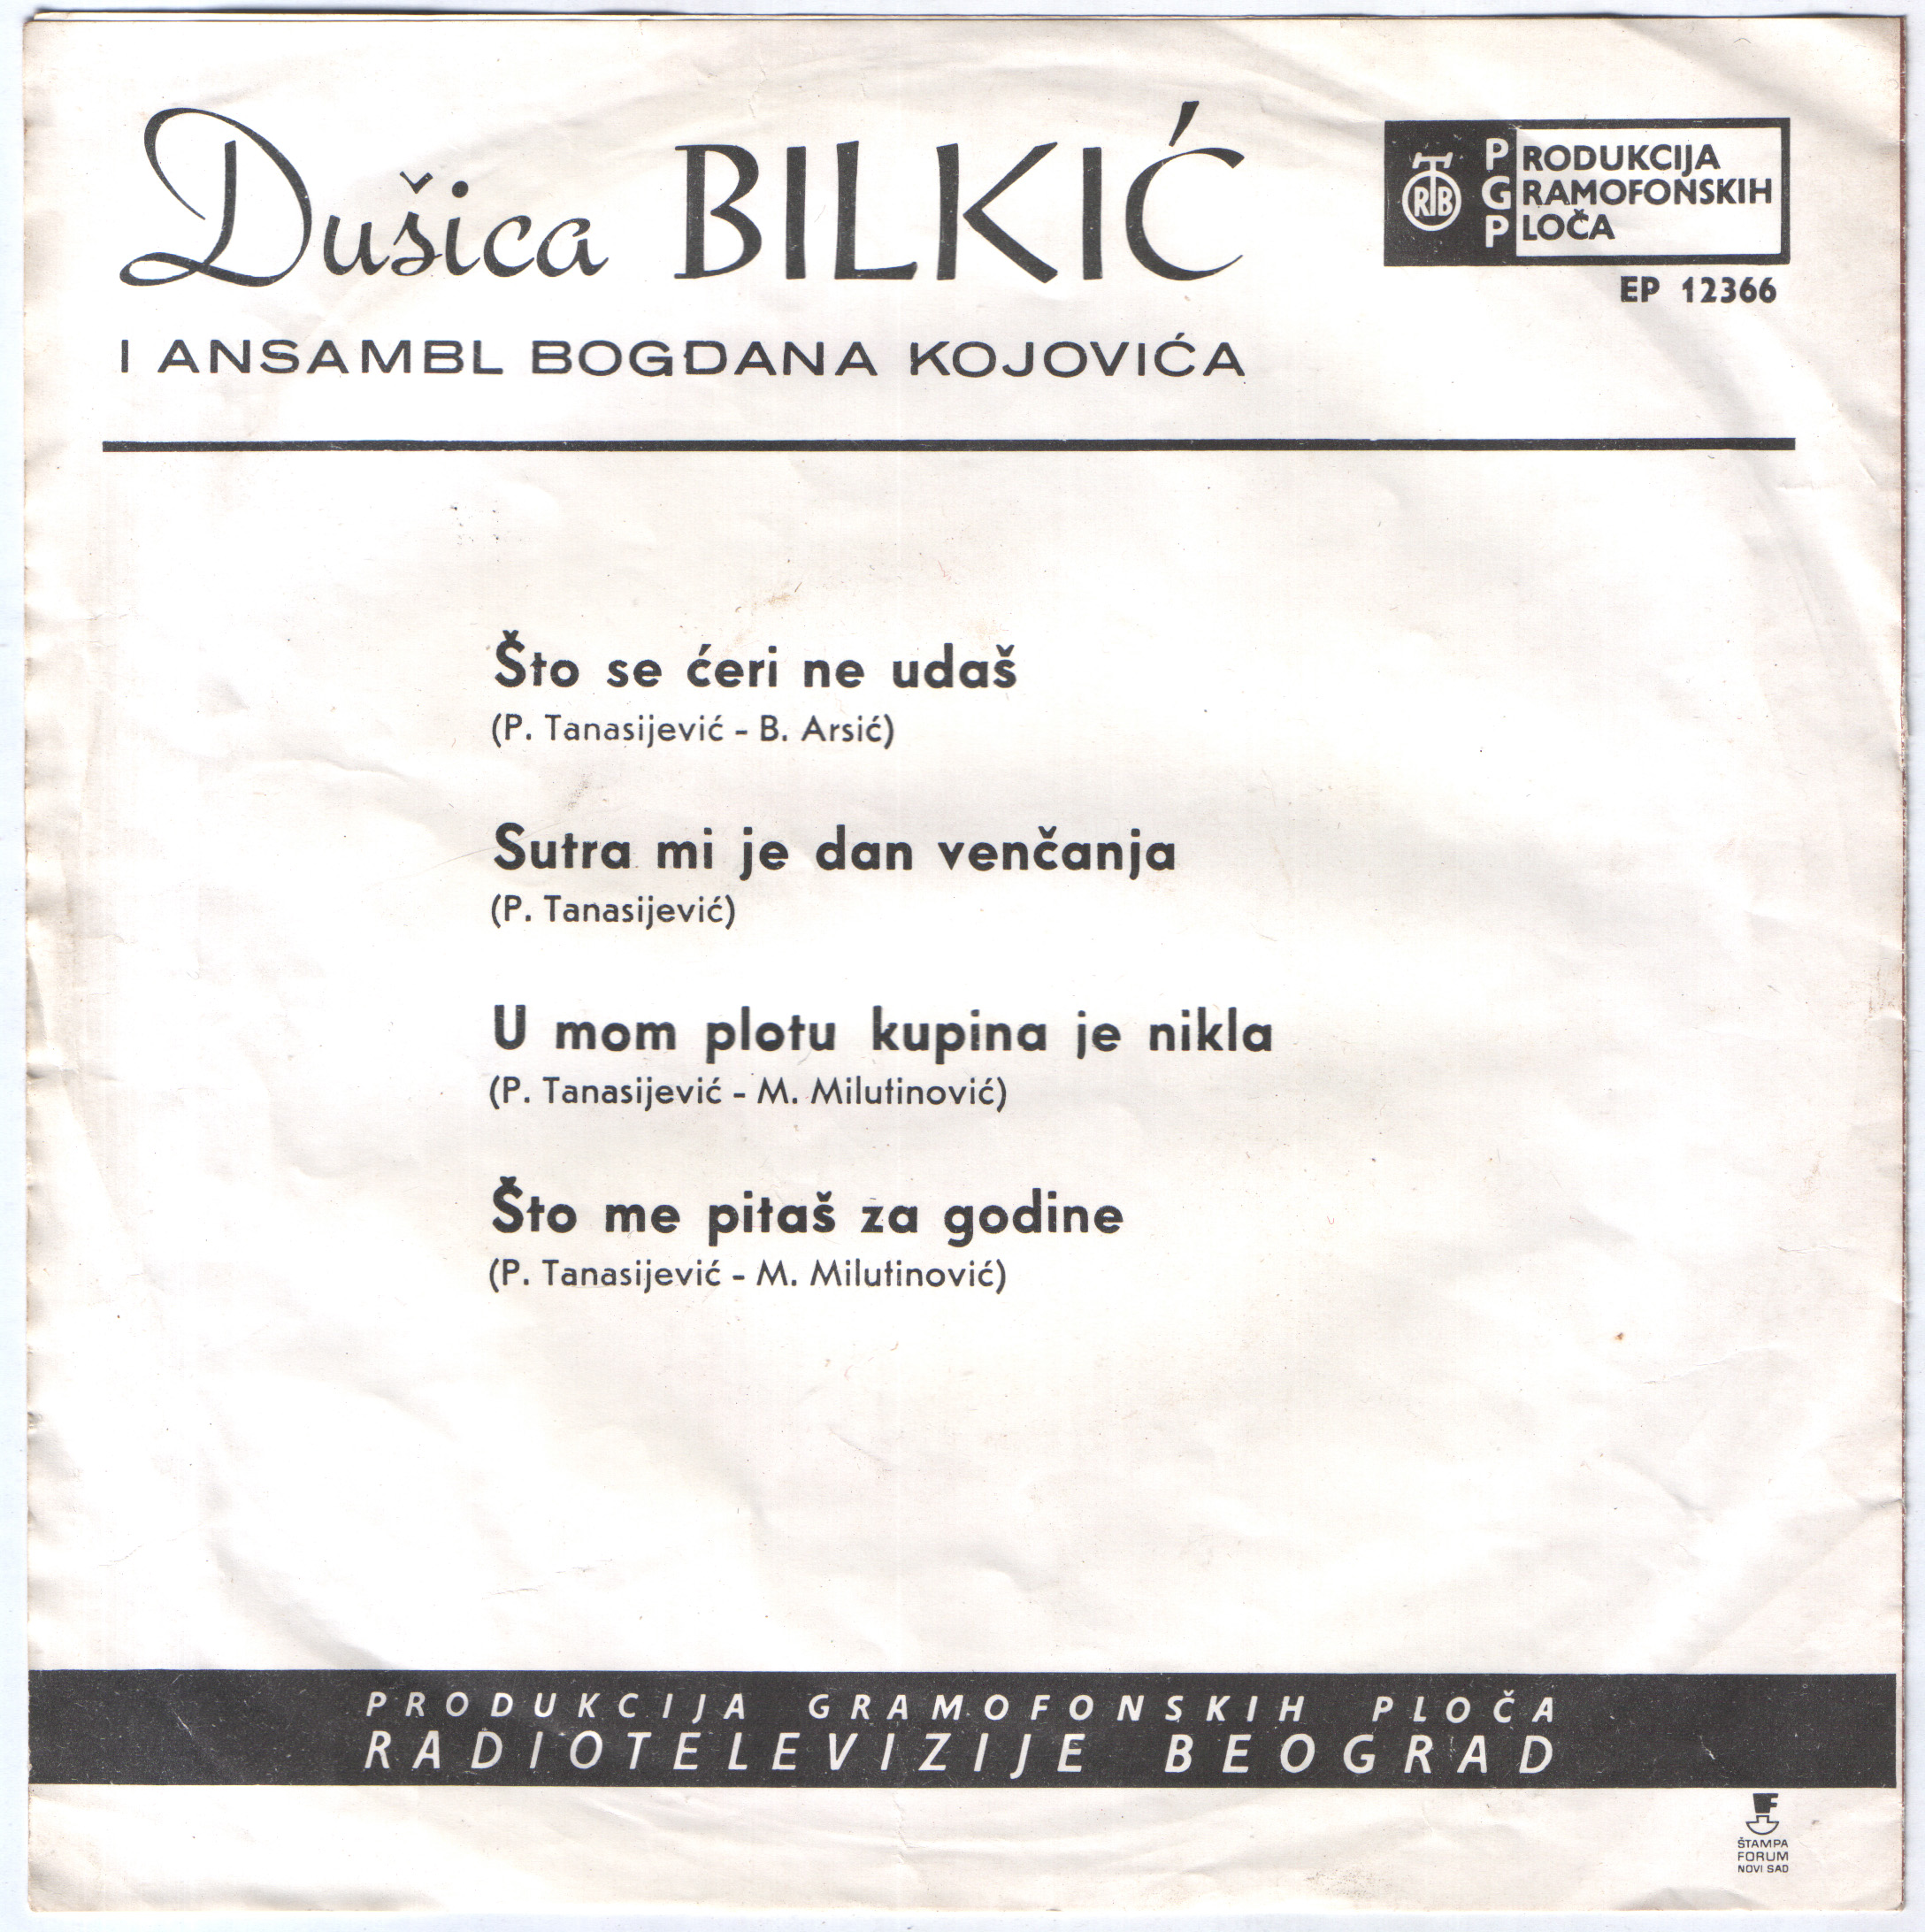 Dusica Bilkic 1969 ZS